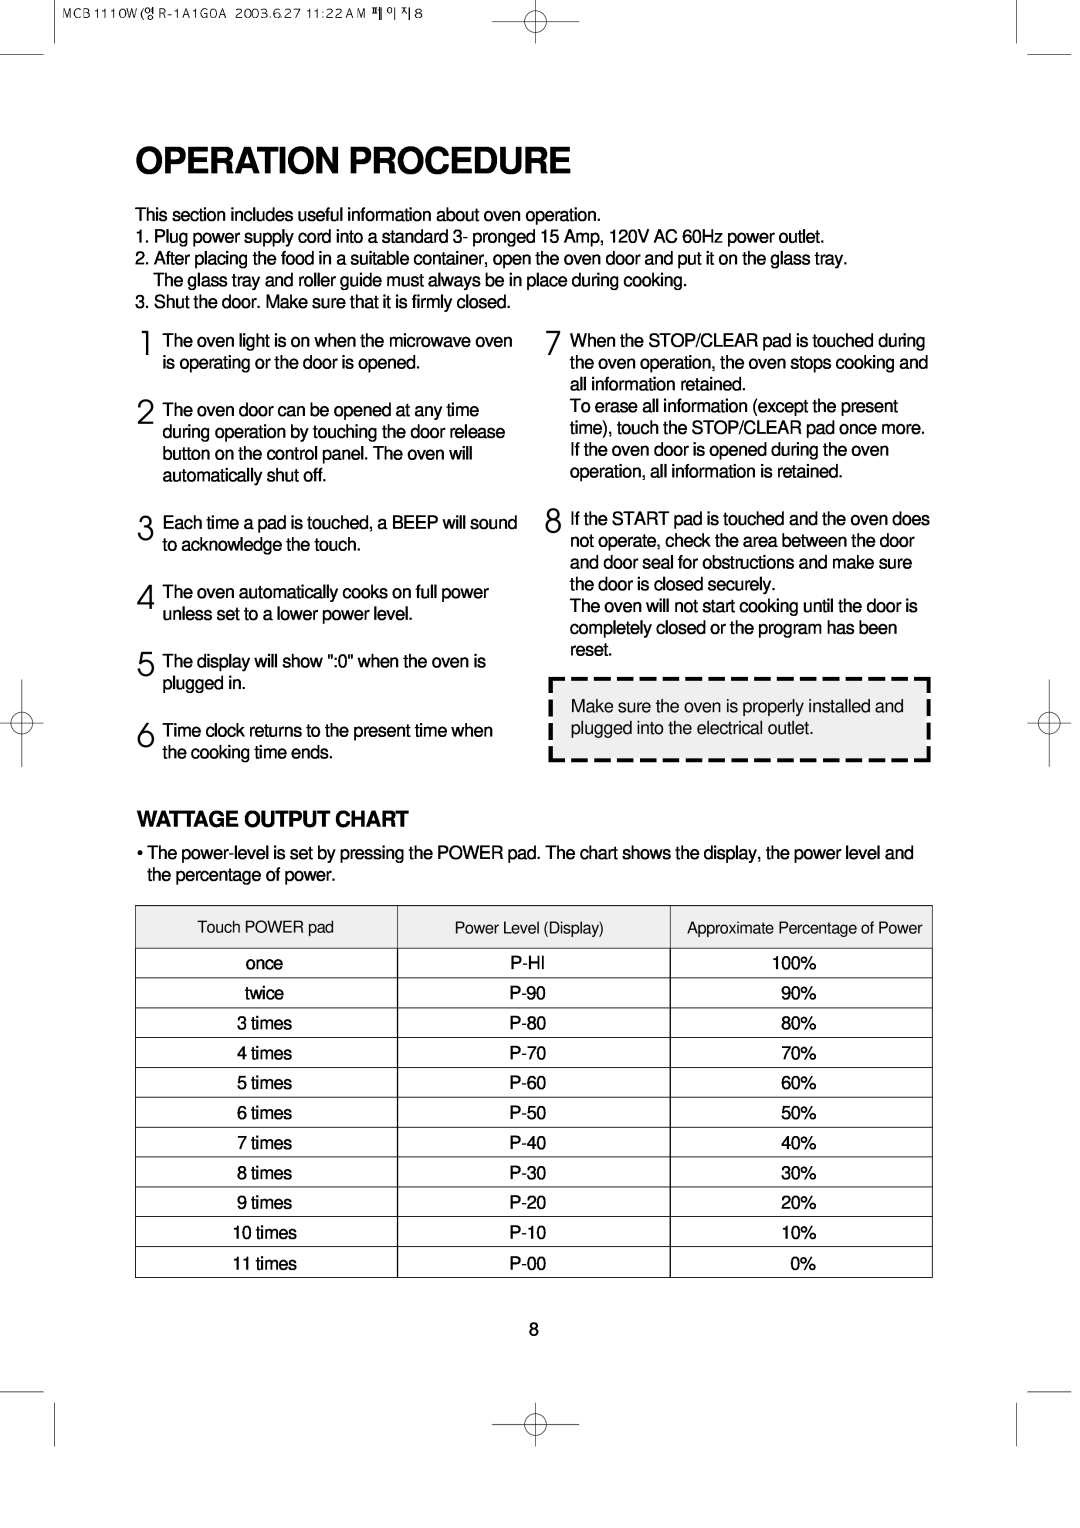 Magic Chef MCB1110W instruction manual Operation Procedure, Wattage Output Chart 